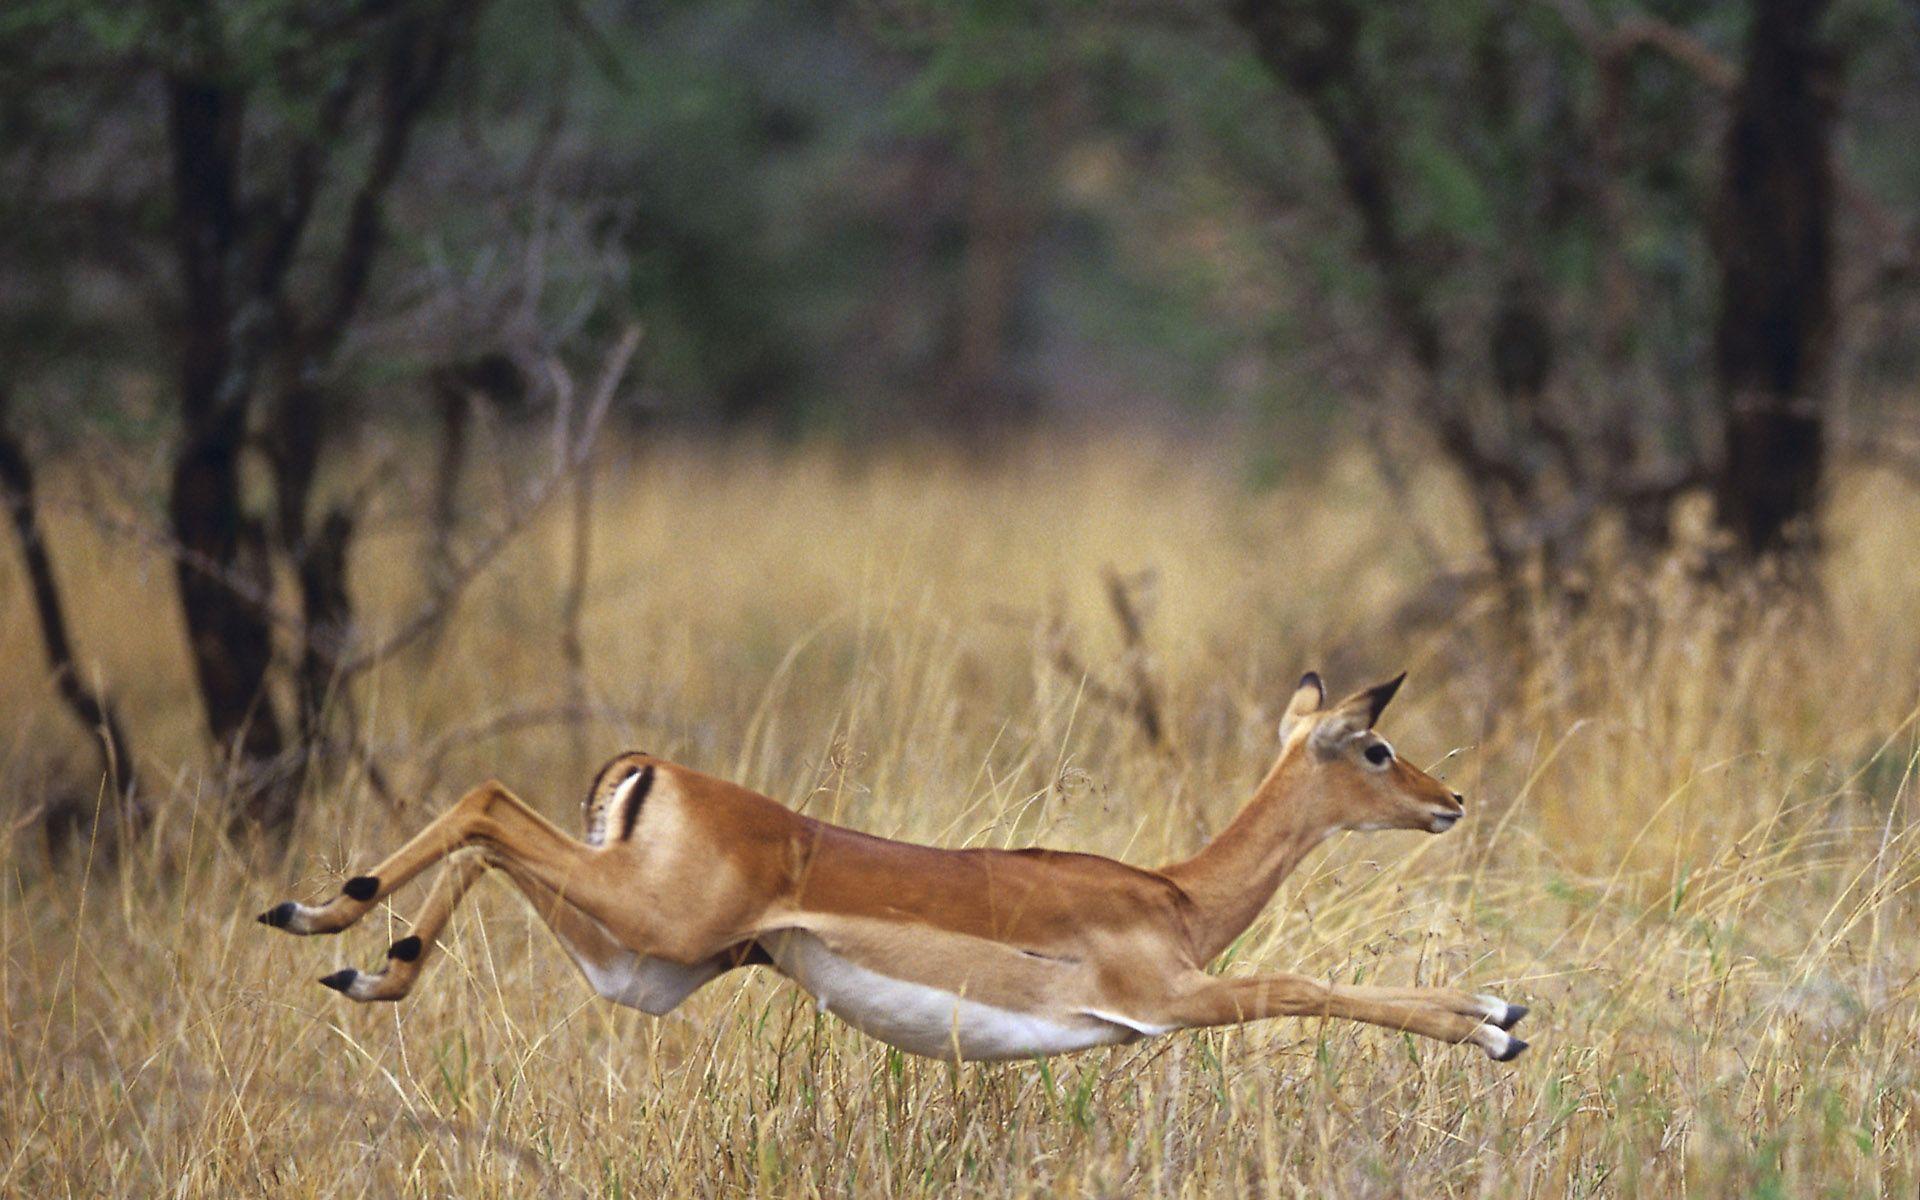 Gazelle Wallpaper Animal Spot